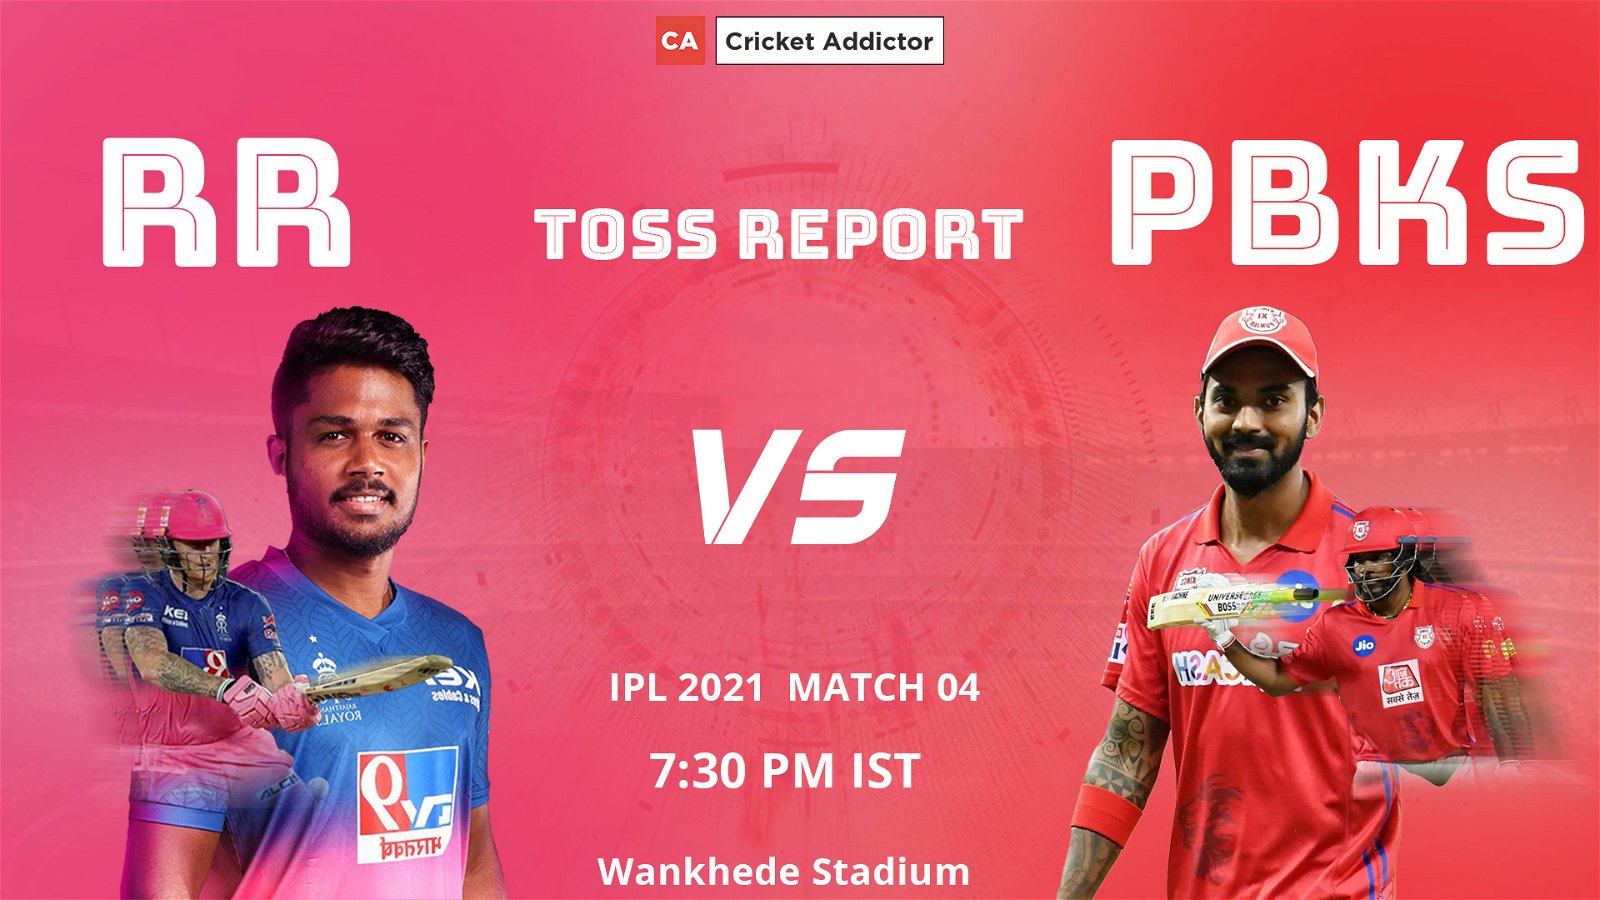 IPL 2021, Match 04: Rajasthan Royals (RR) vs Punjab Kings (PBKS)- Toss Report